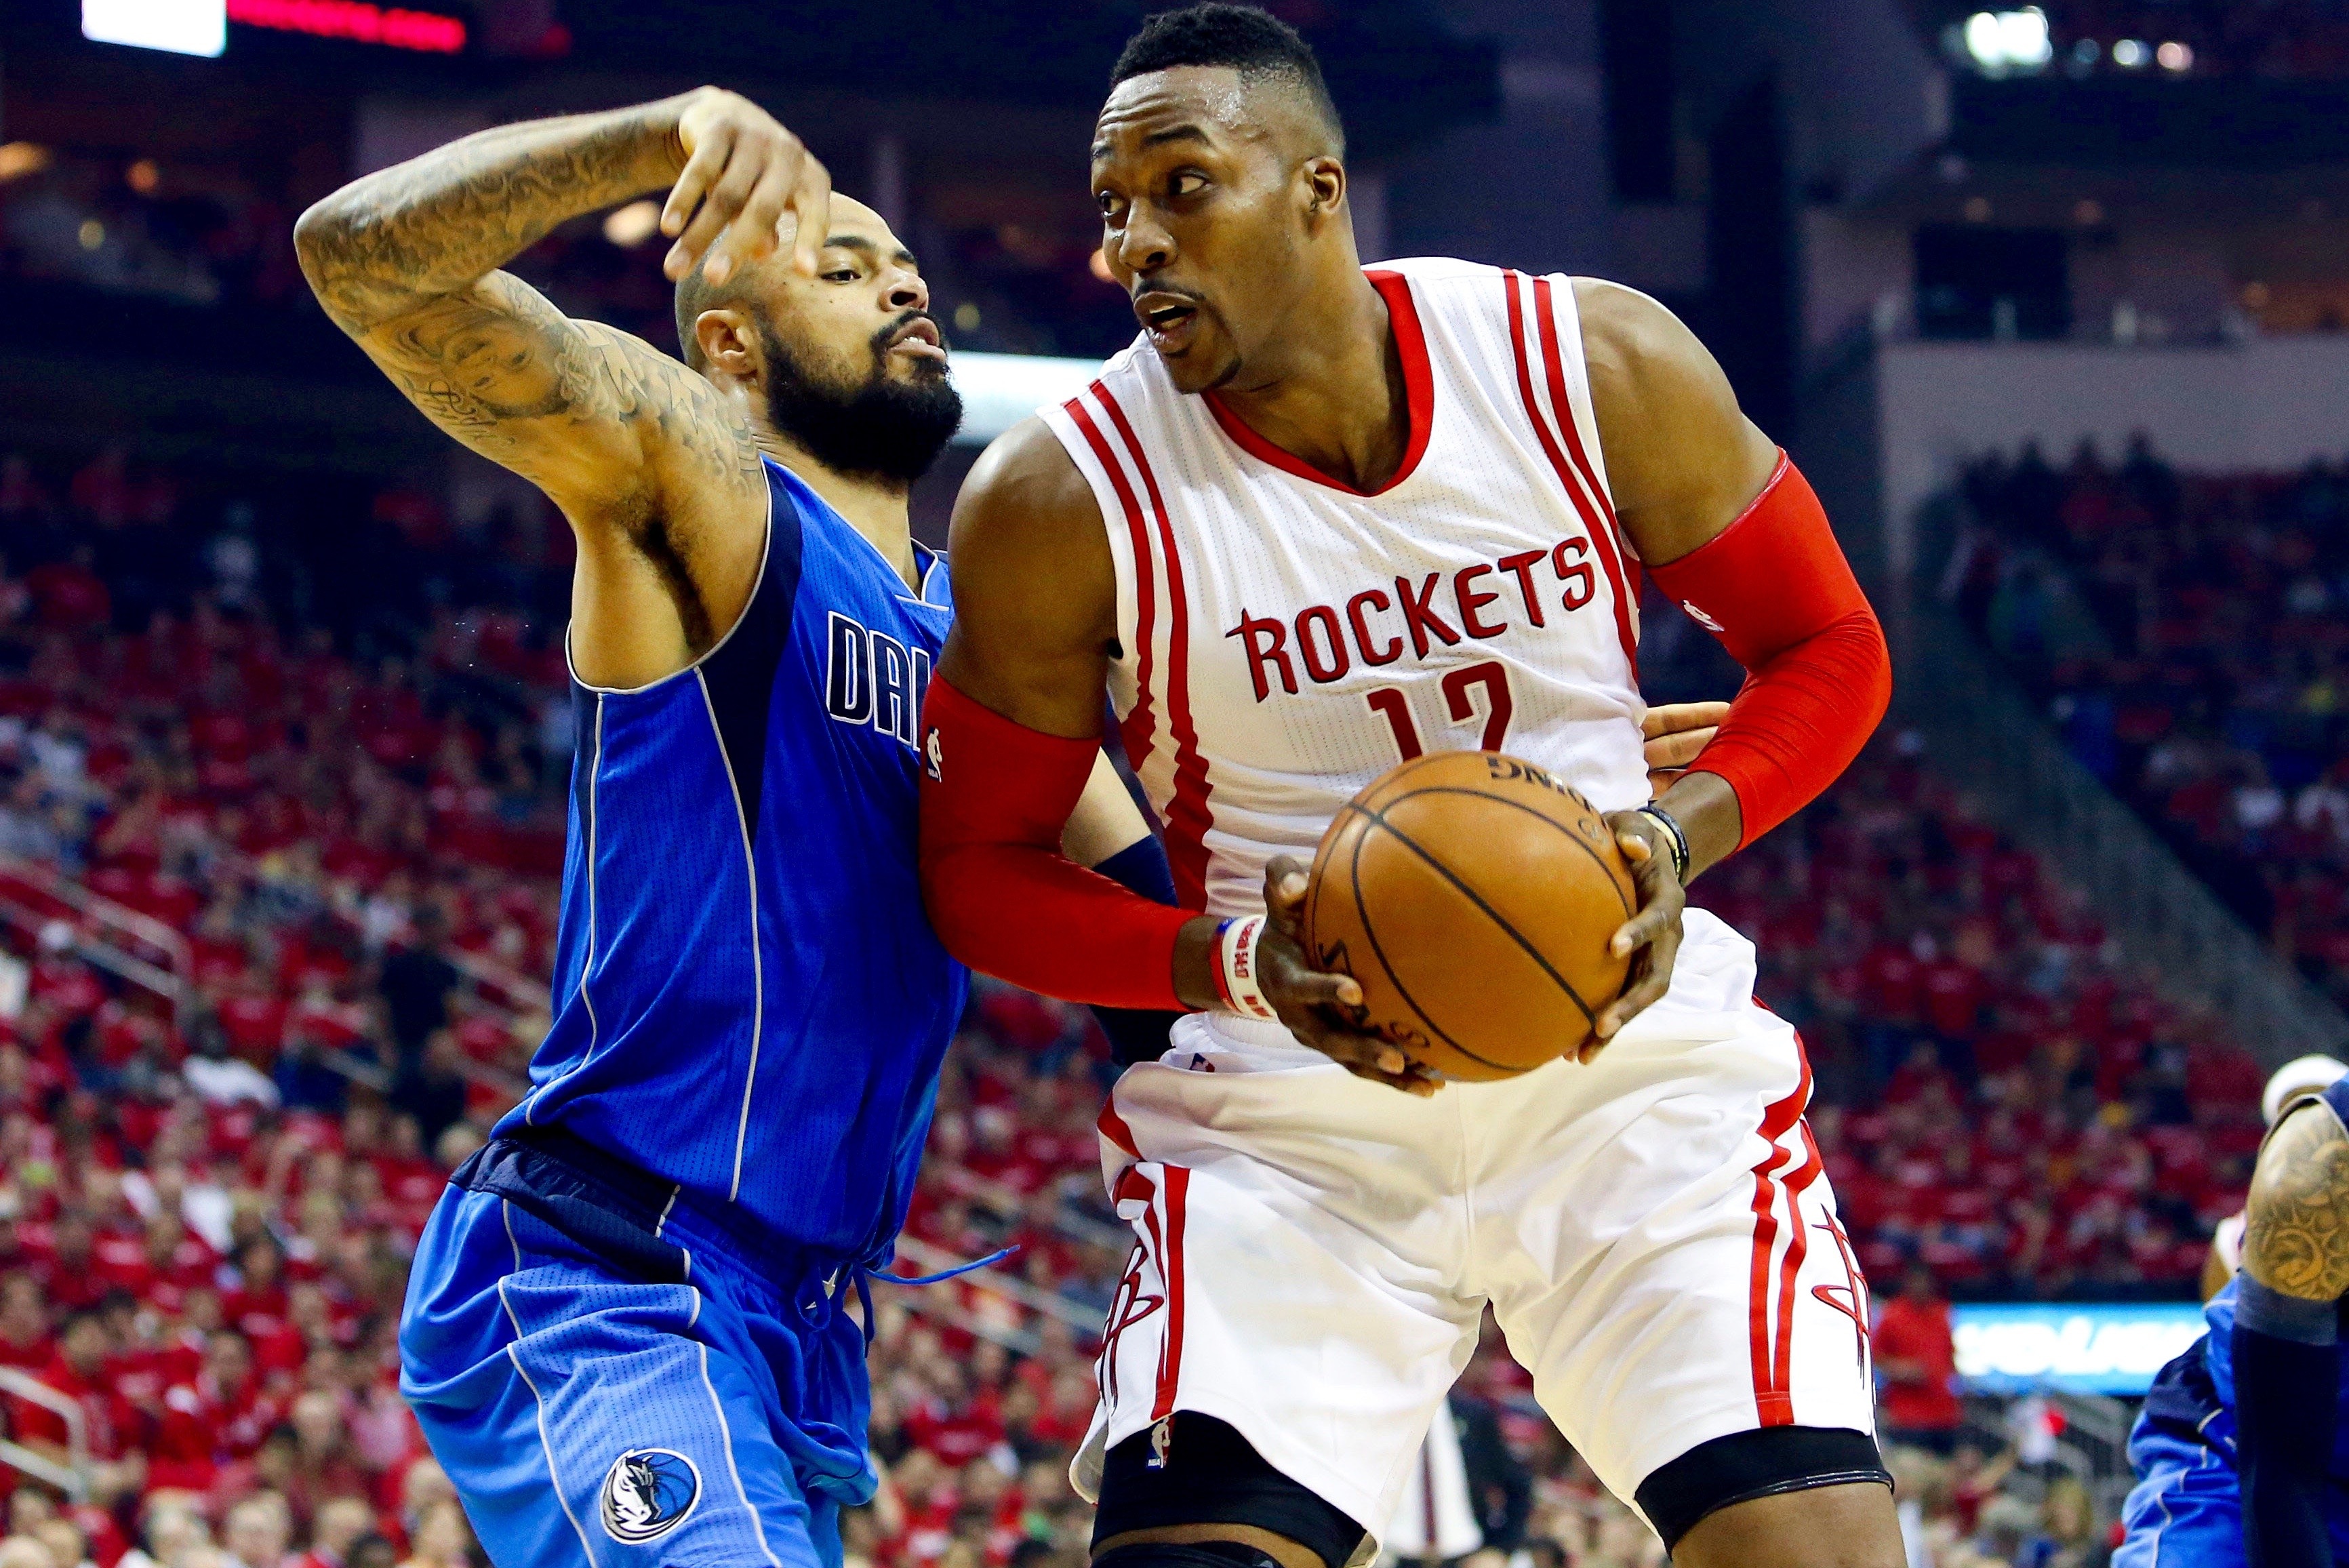 Dallas Mavericks vs. Houston Rockets: Live Score and Analysis for Game 1 | Bleacher Report